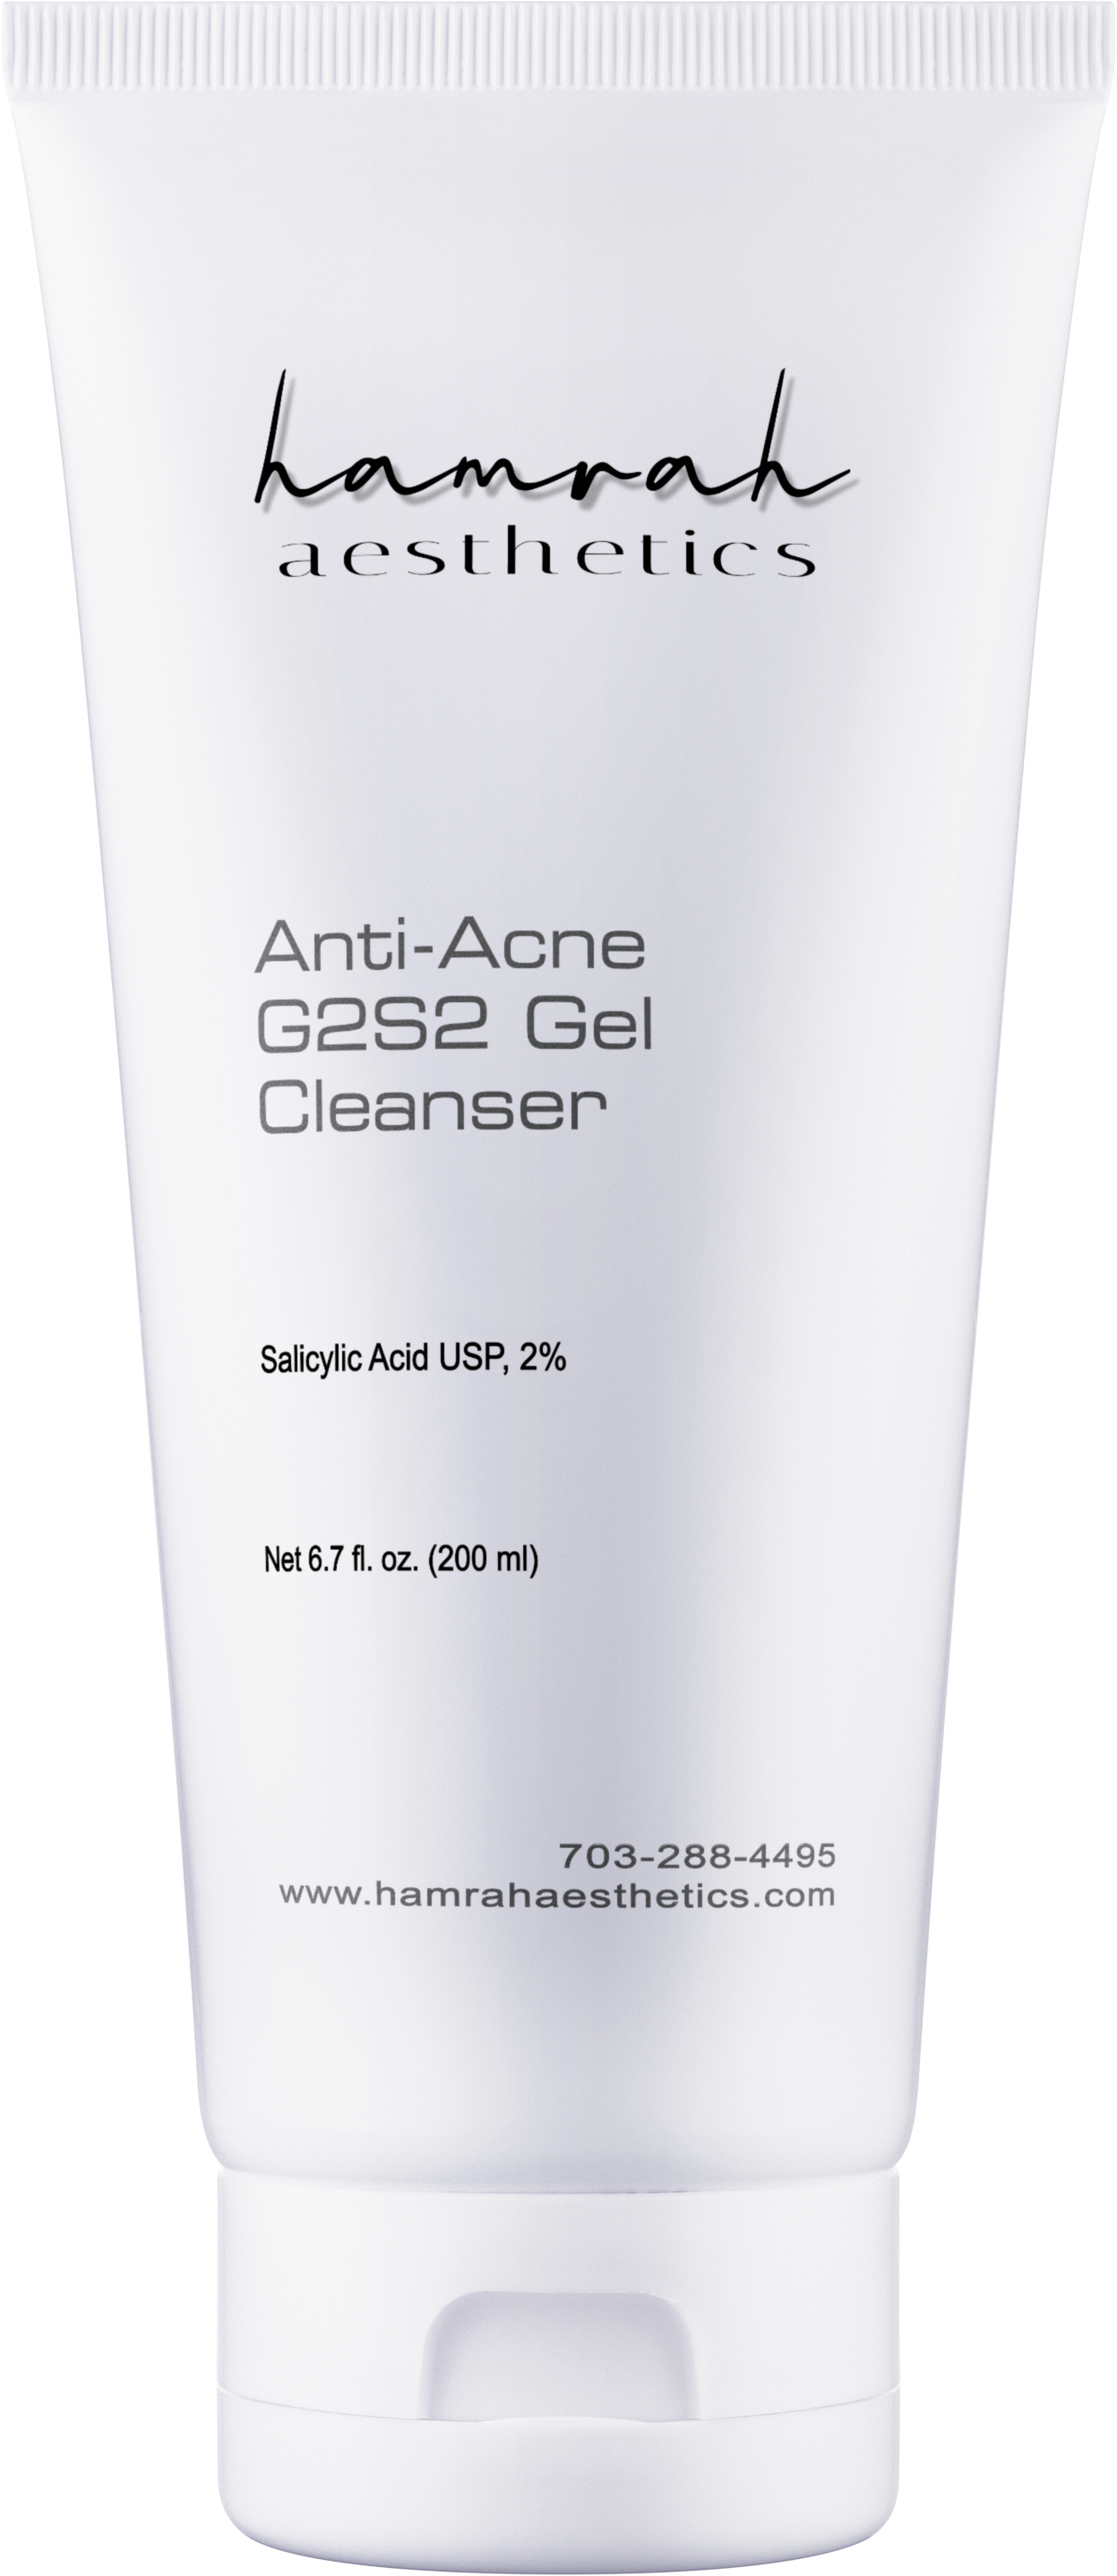 Anti-Acne G2S2 Gel Cleanser